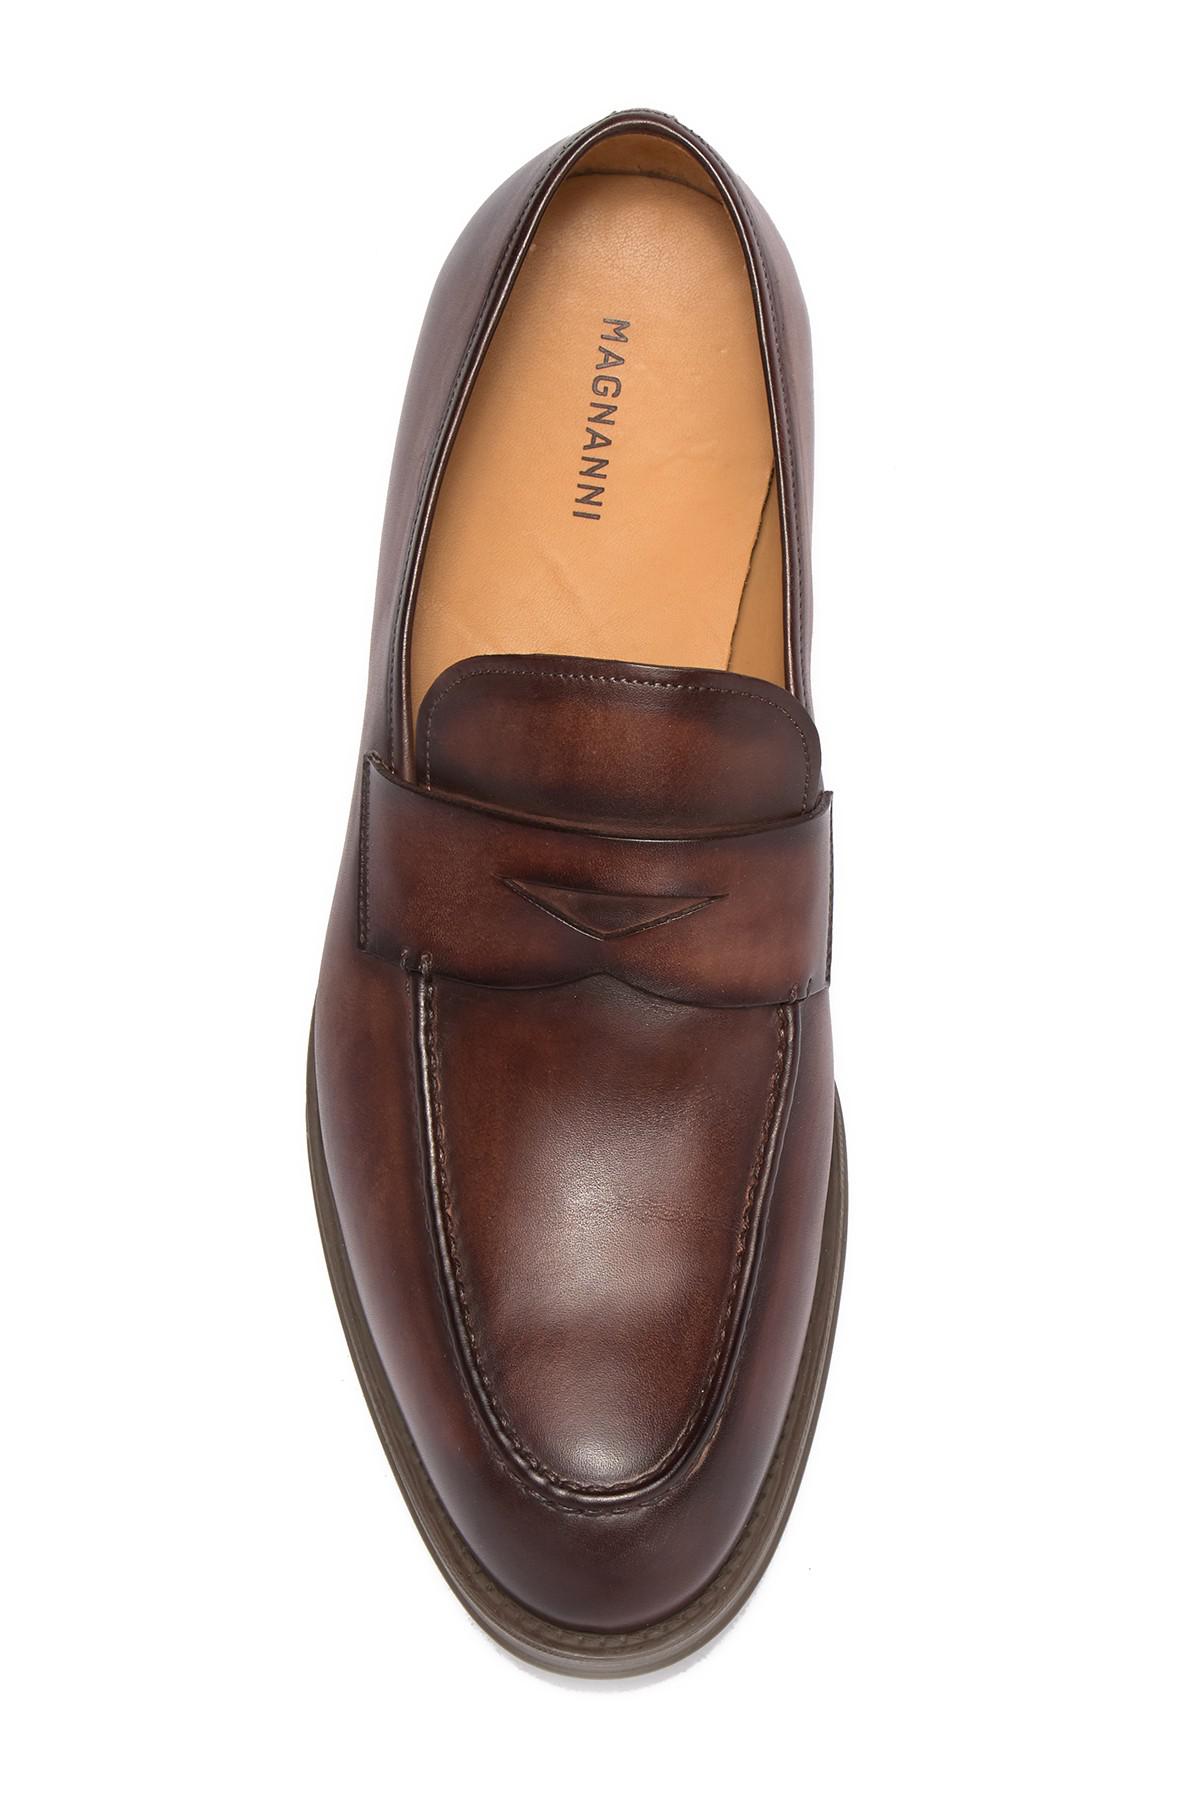 Lyst - Magnanni Shoes Bernardo Leather Penny Loafer in Brown for Men